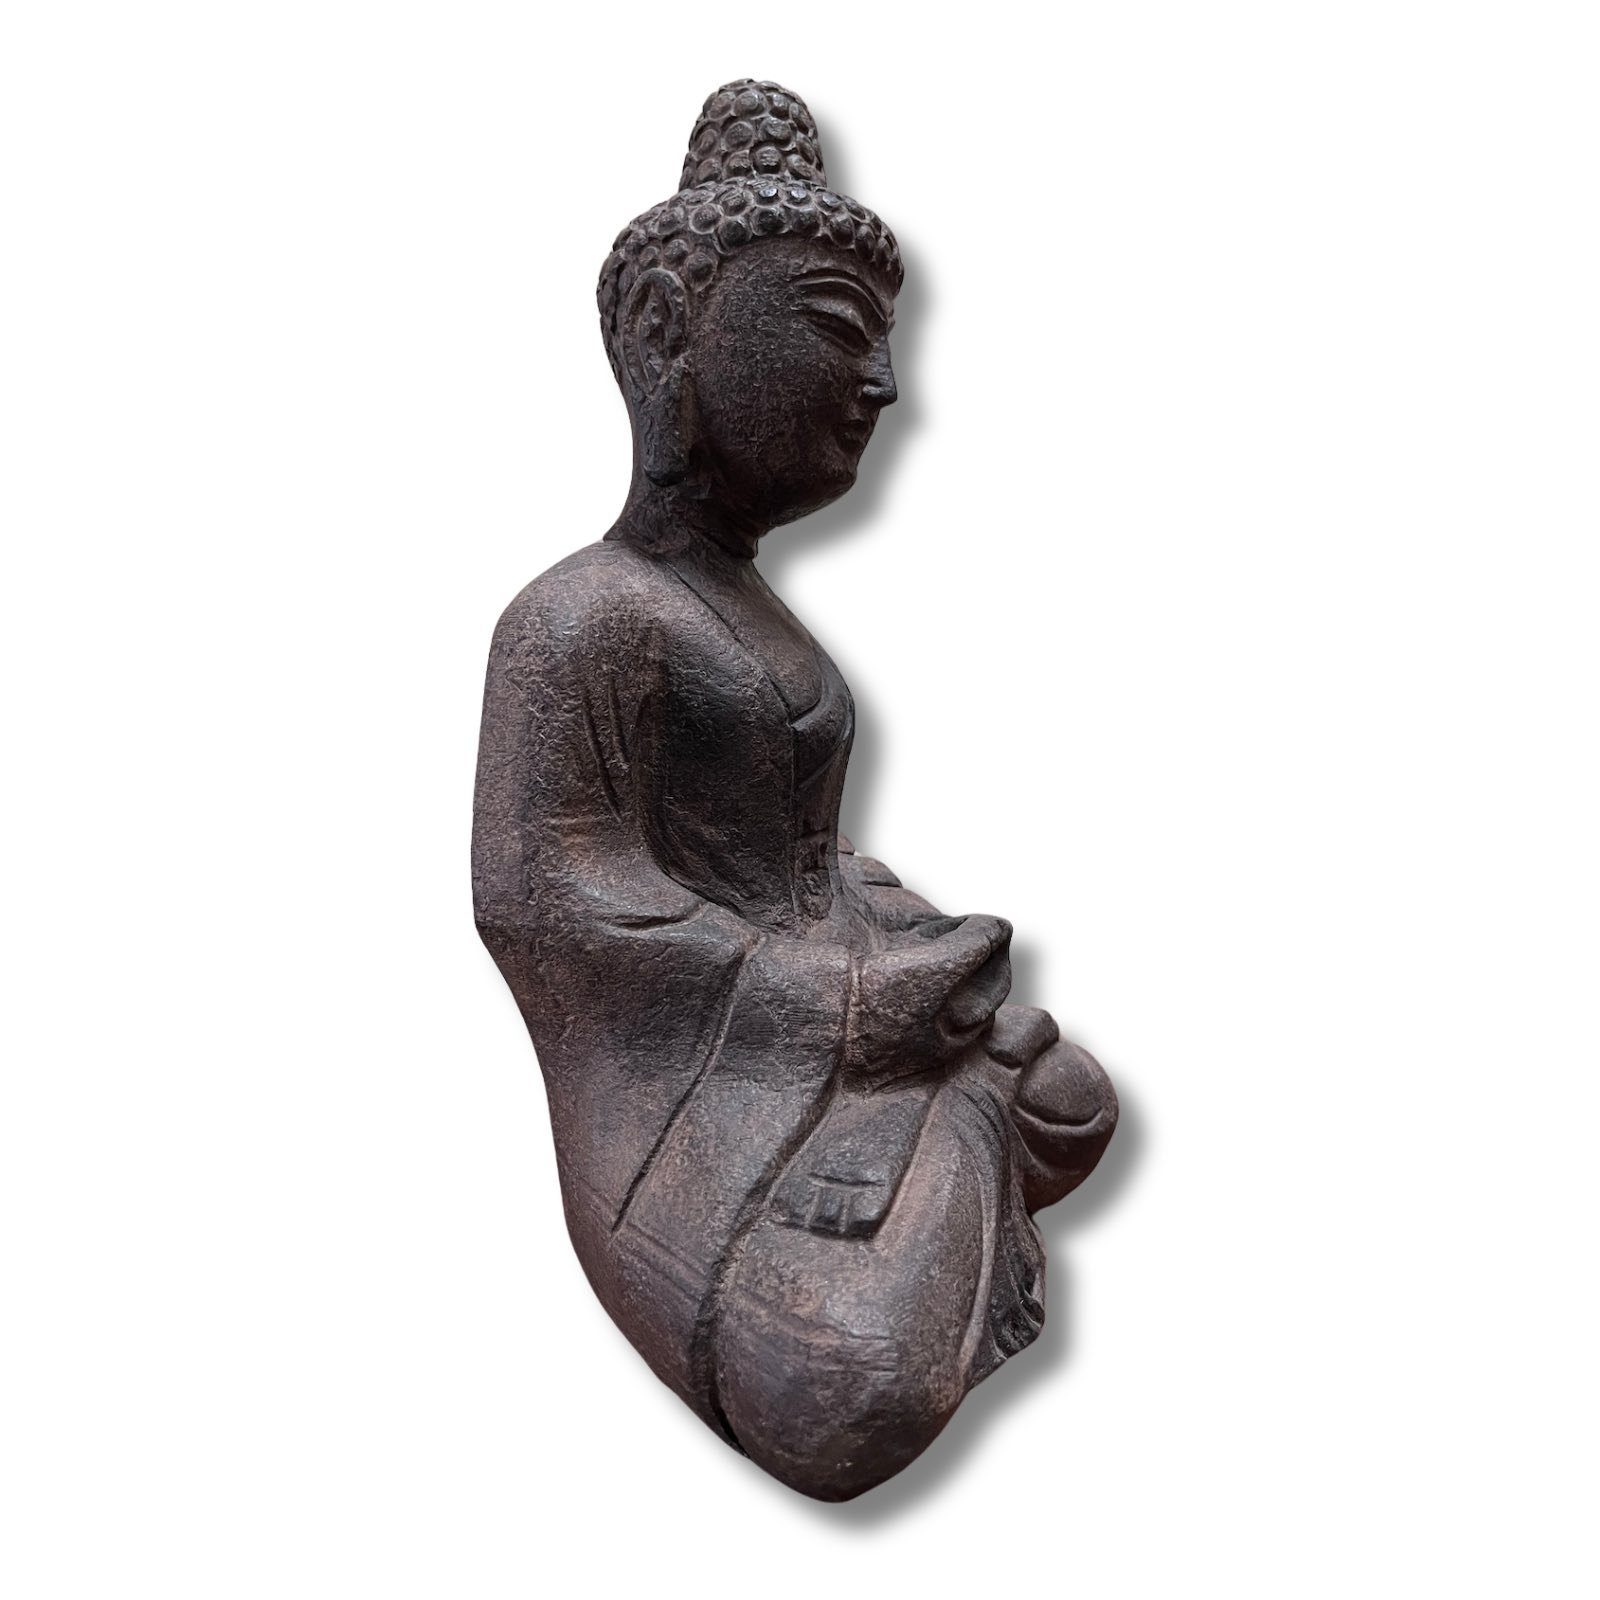 Asien LifeStyle Buddhafigur Garten Figur Buddha Tibet groß Meditation 36cm Naturstein China